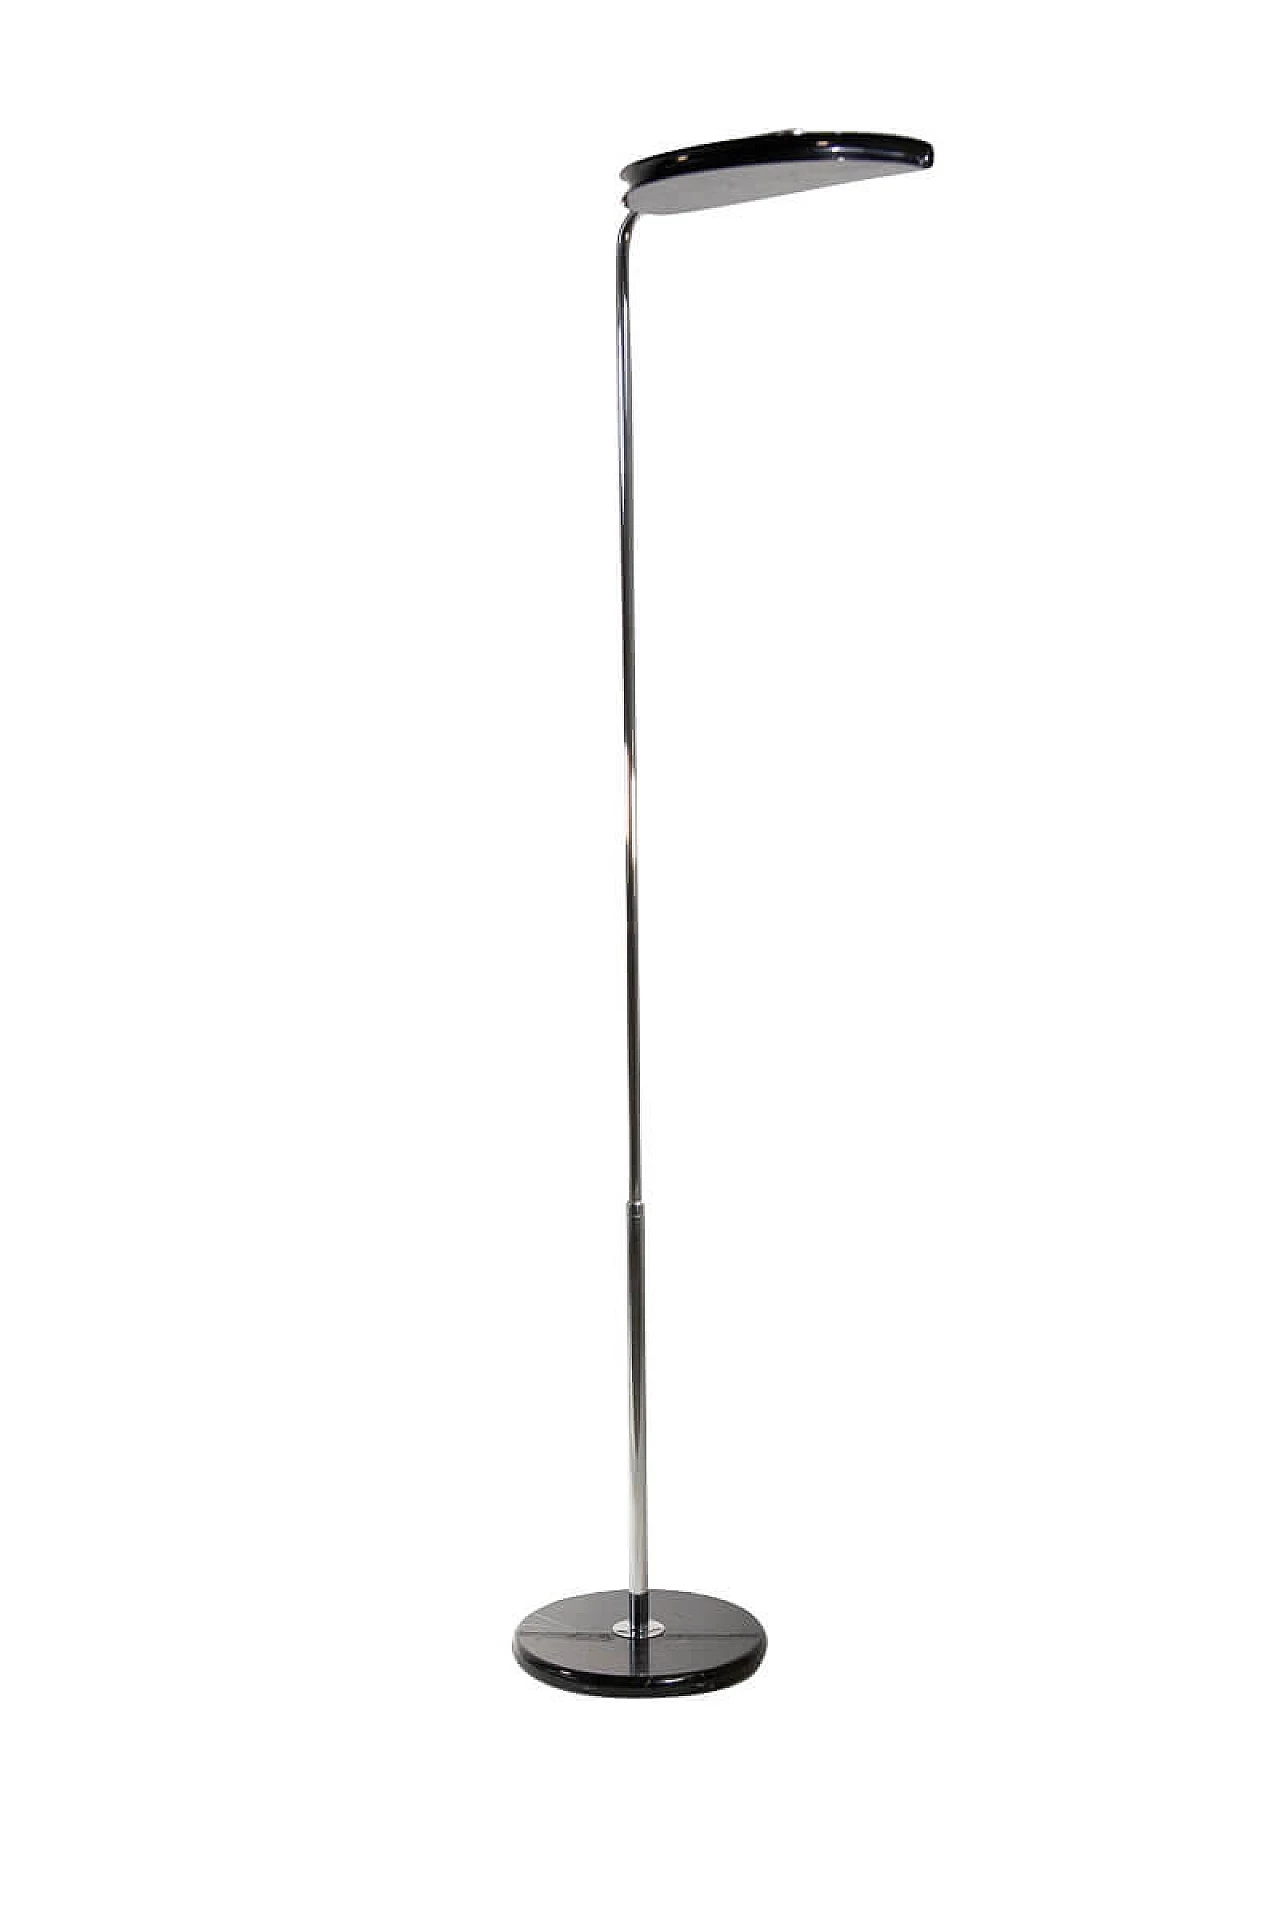 Mezzaluna floor lamp by Bruno Gecchelin for Skipper, 70s 1205990